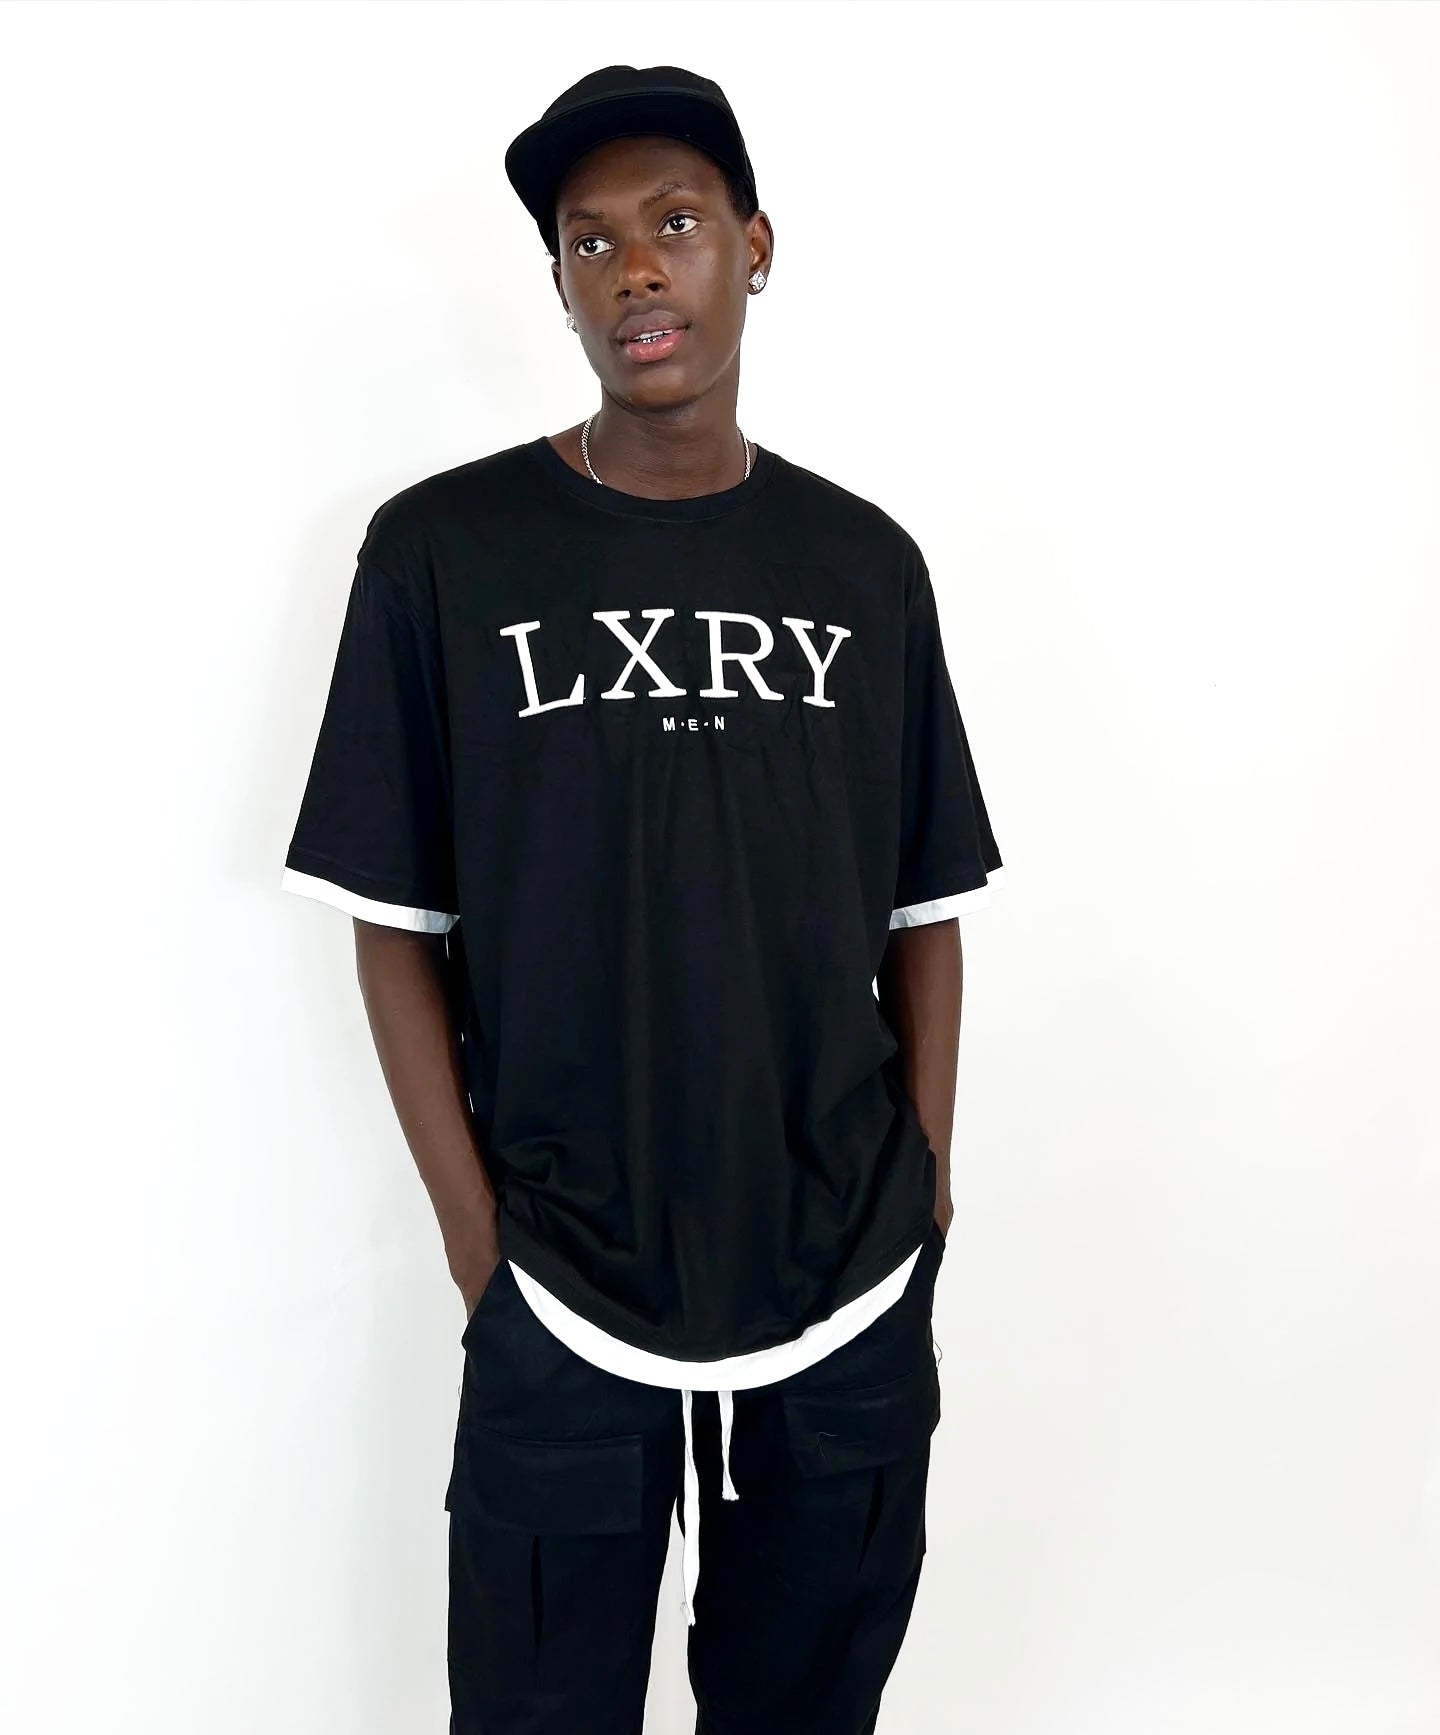 SMOG LXRY T-shirt in black